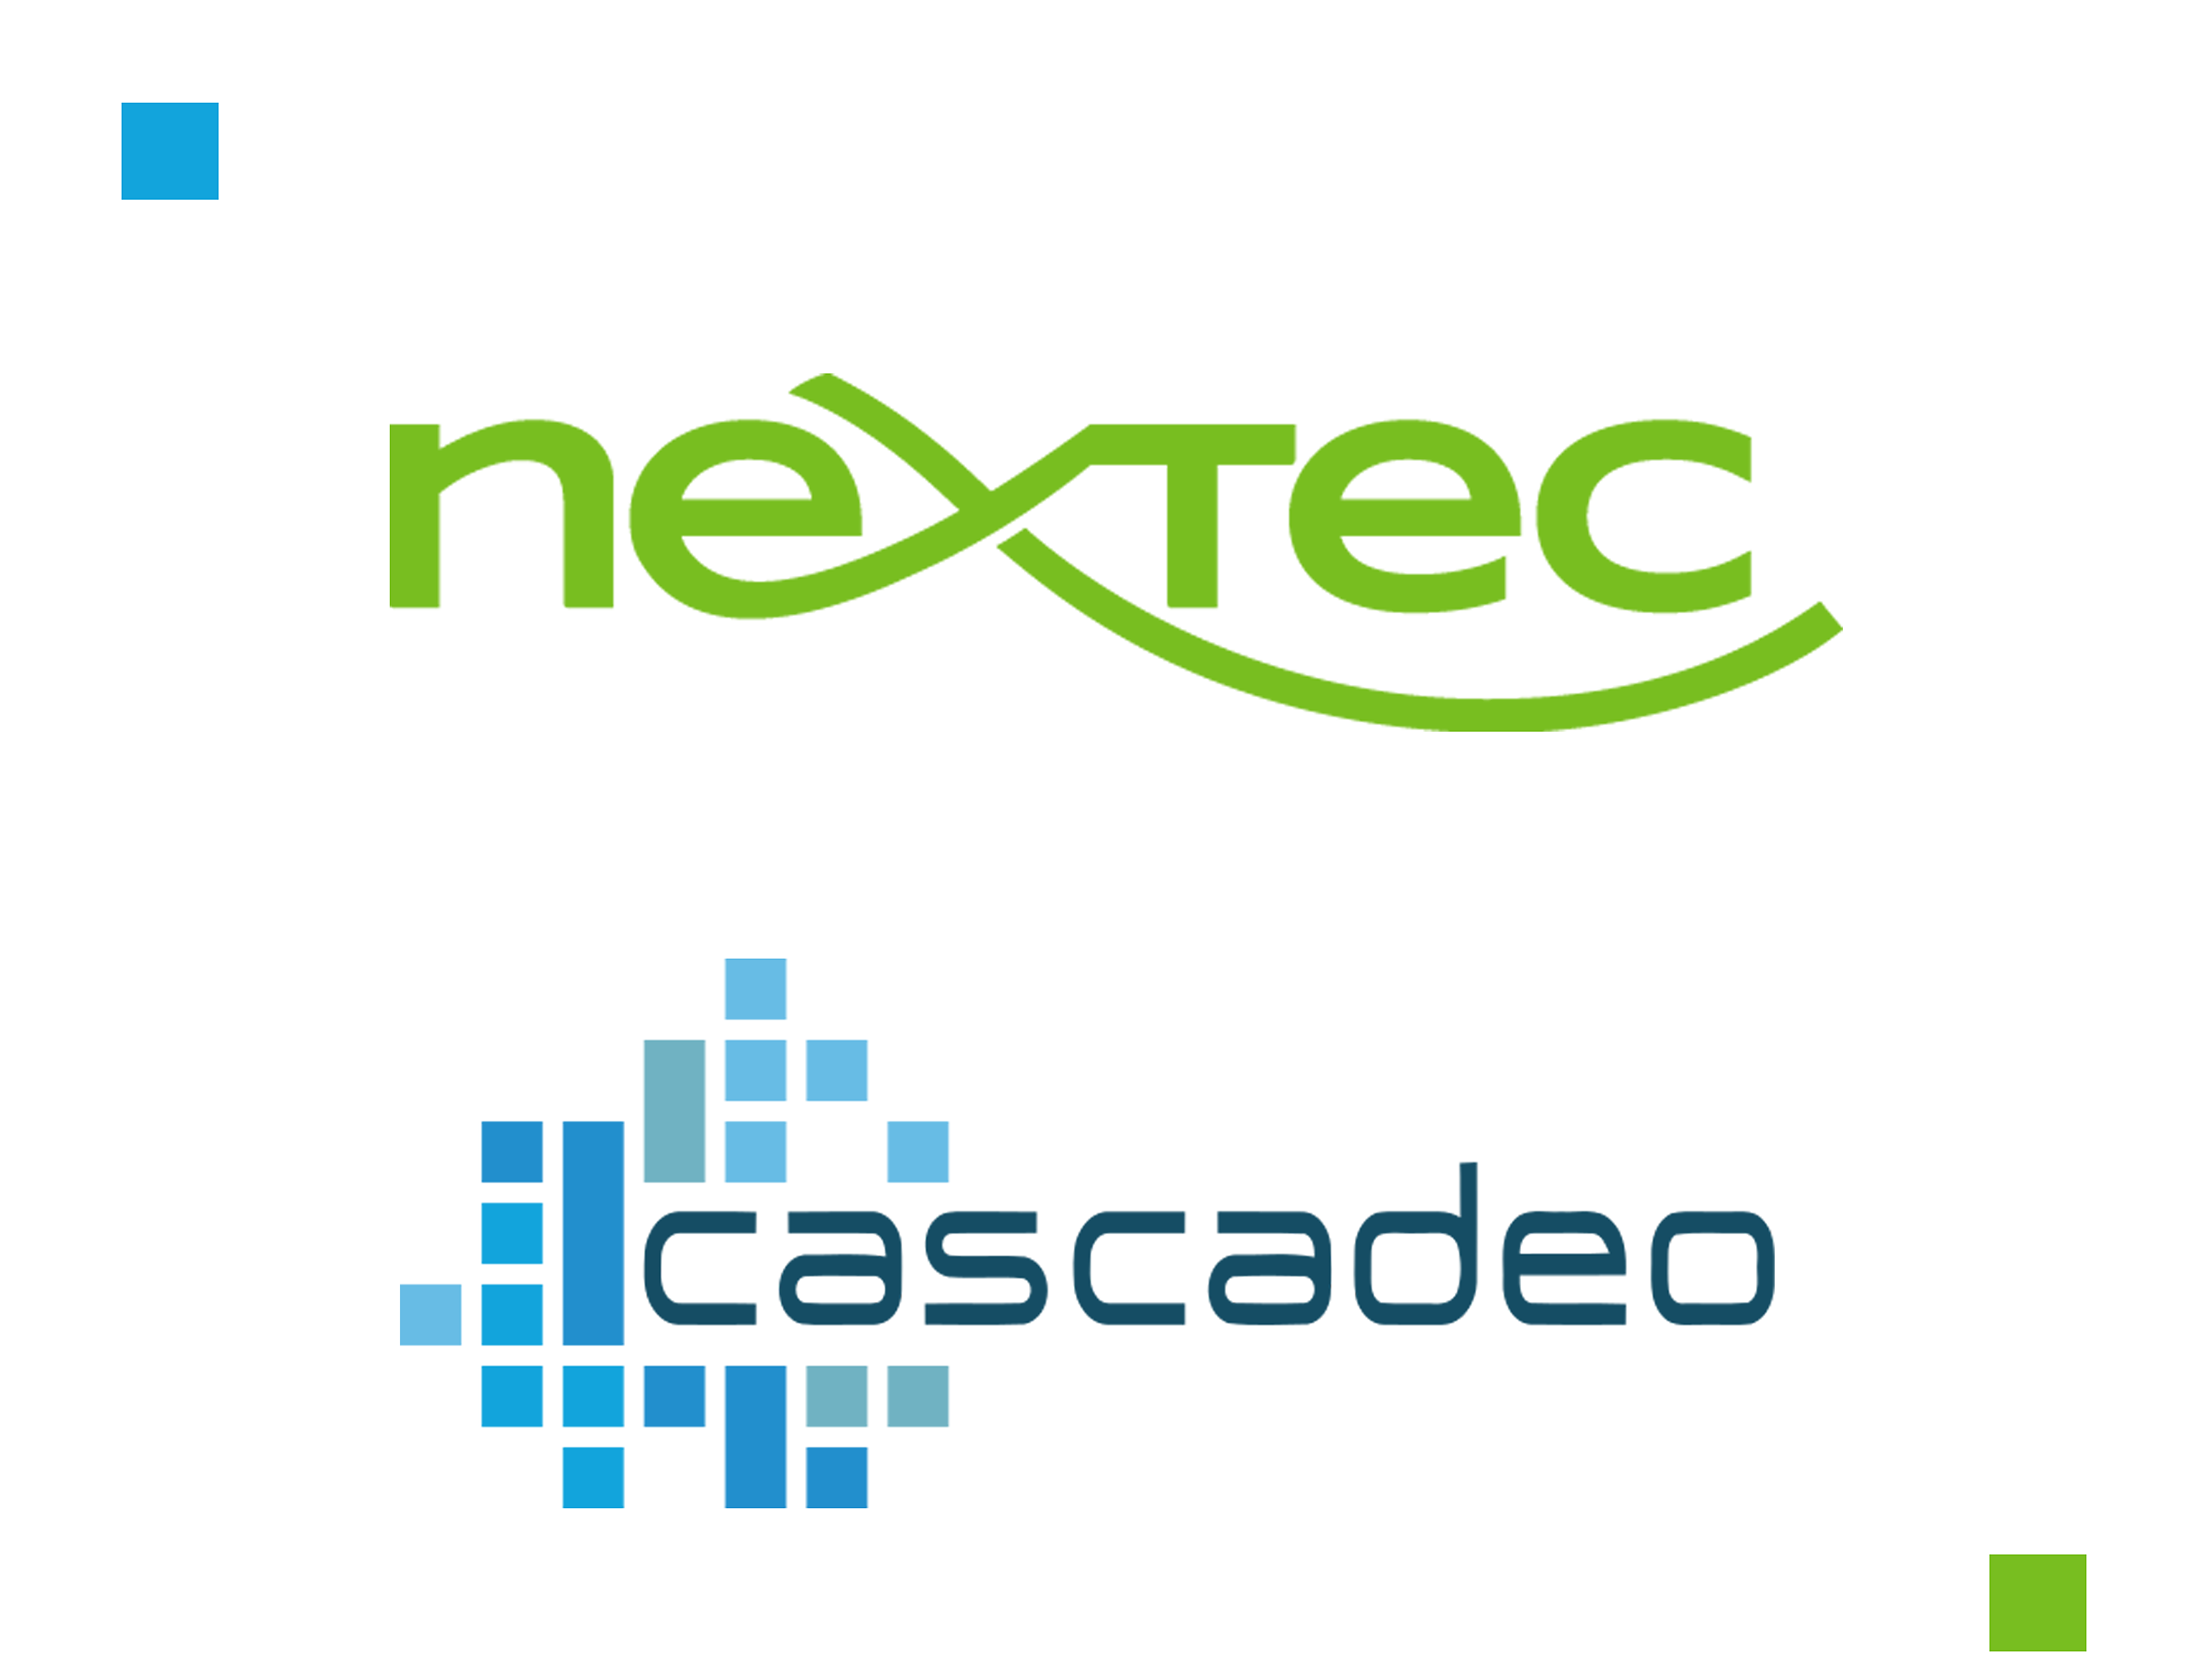 NexTec and Cascadeo Logos